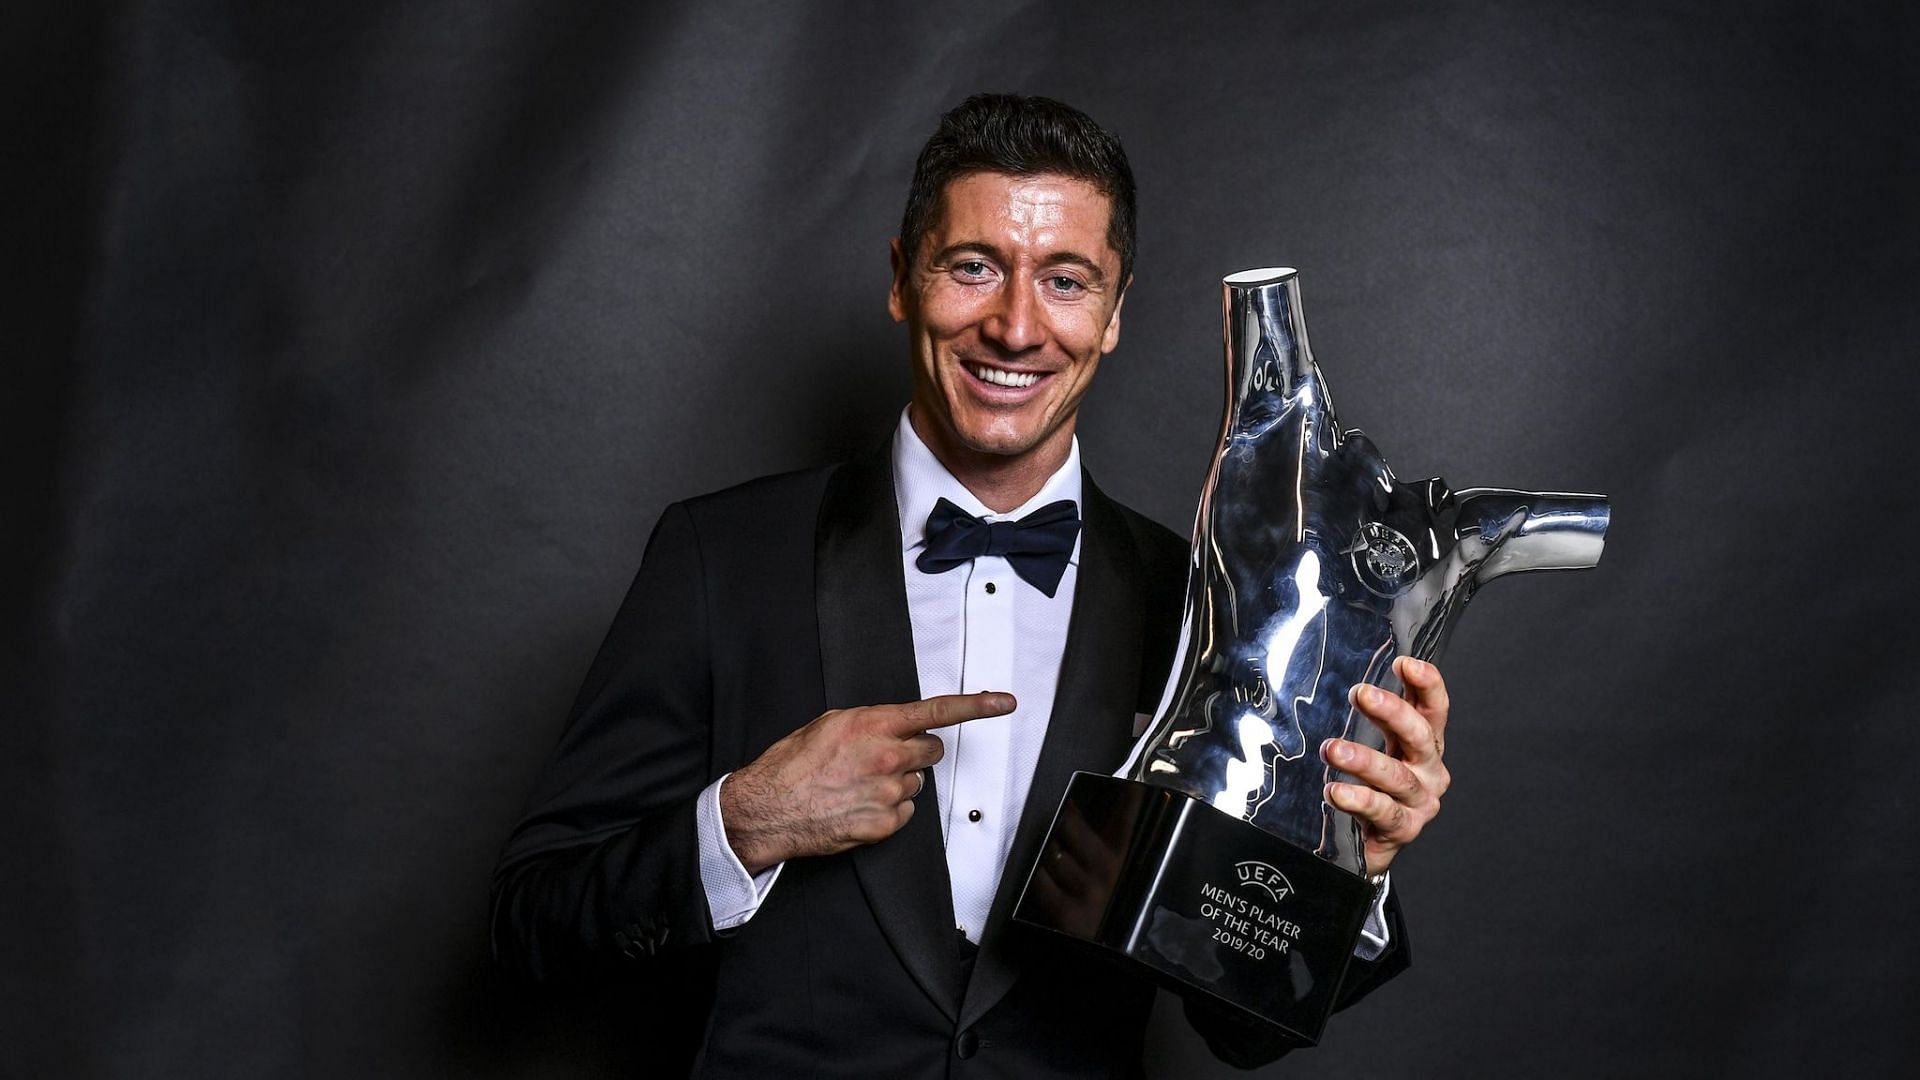 Robert Lewandowski winning the award for 2019-20